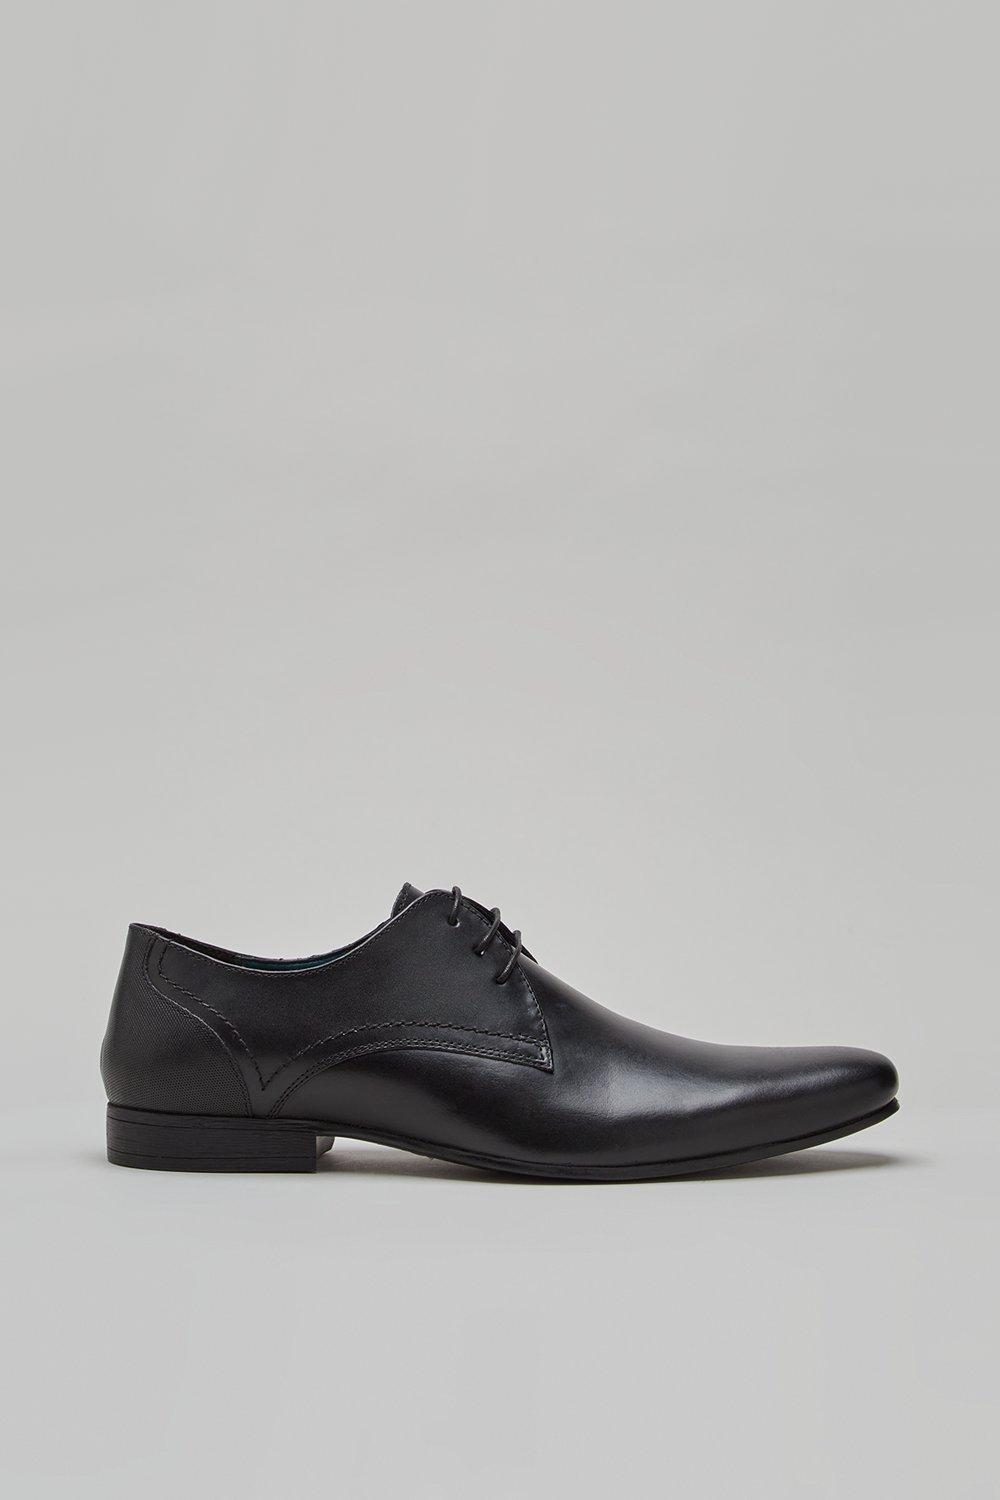 Mens Black Leather Derby Shoes - 9